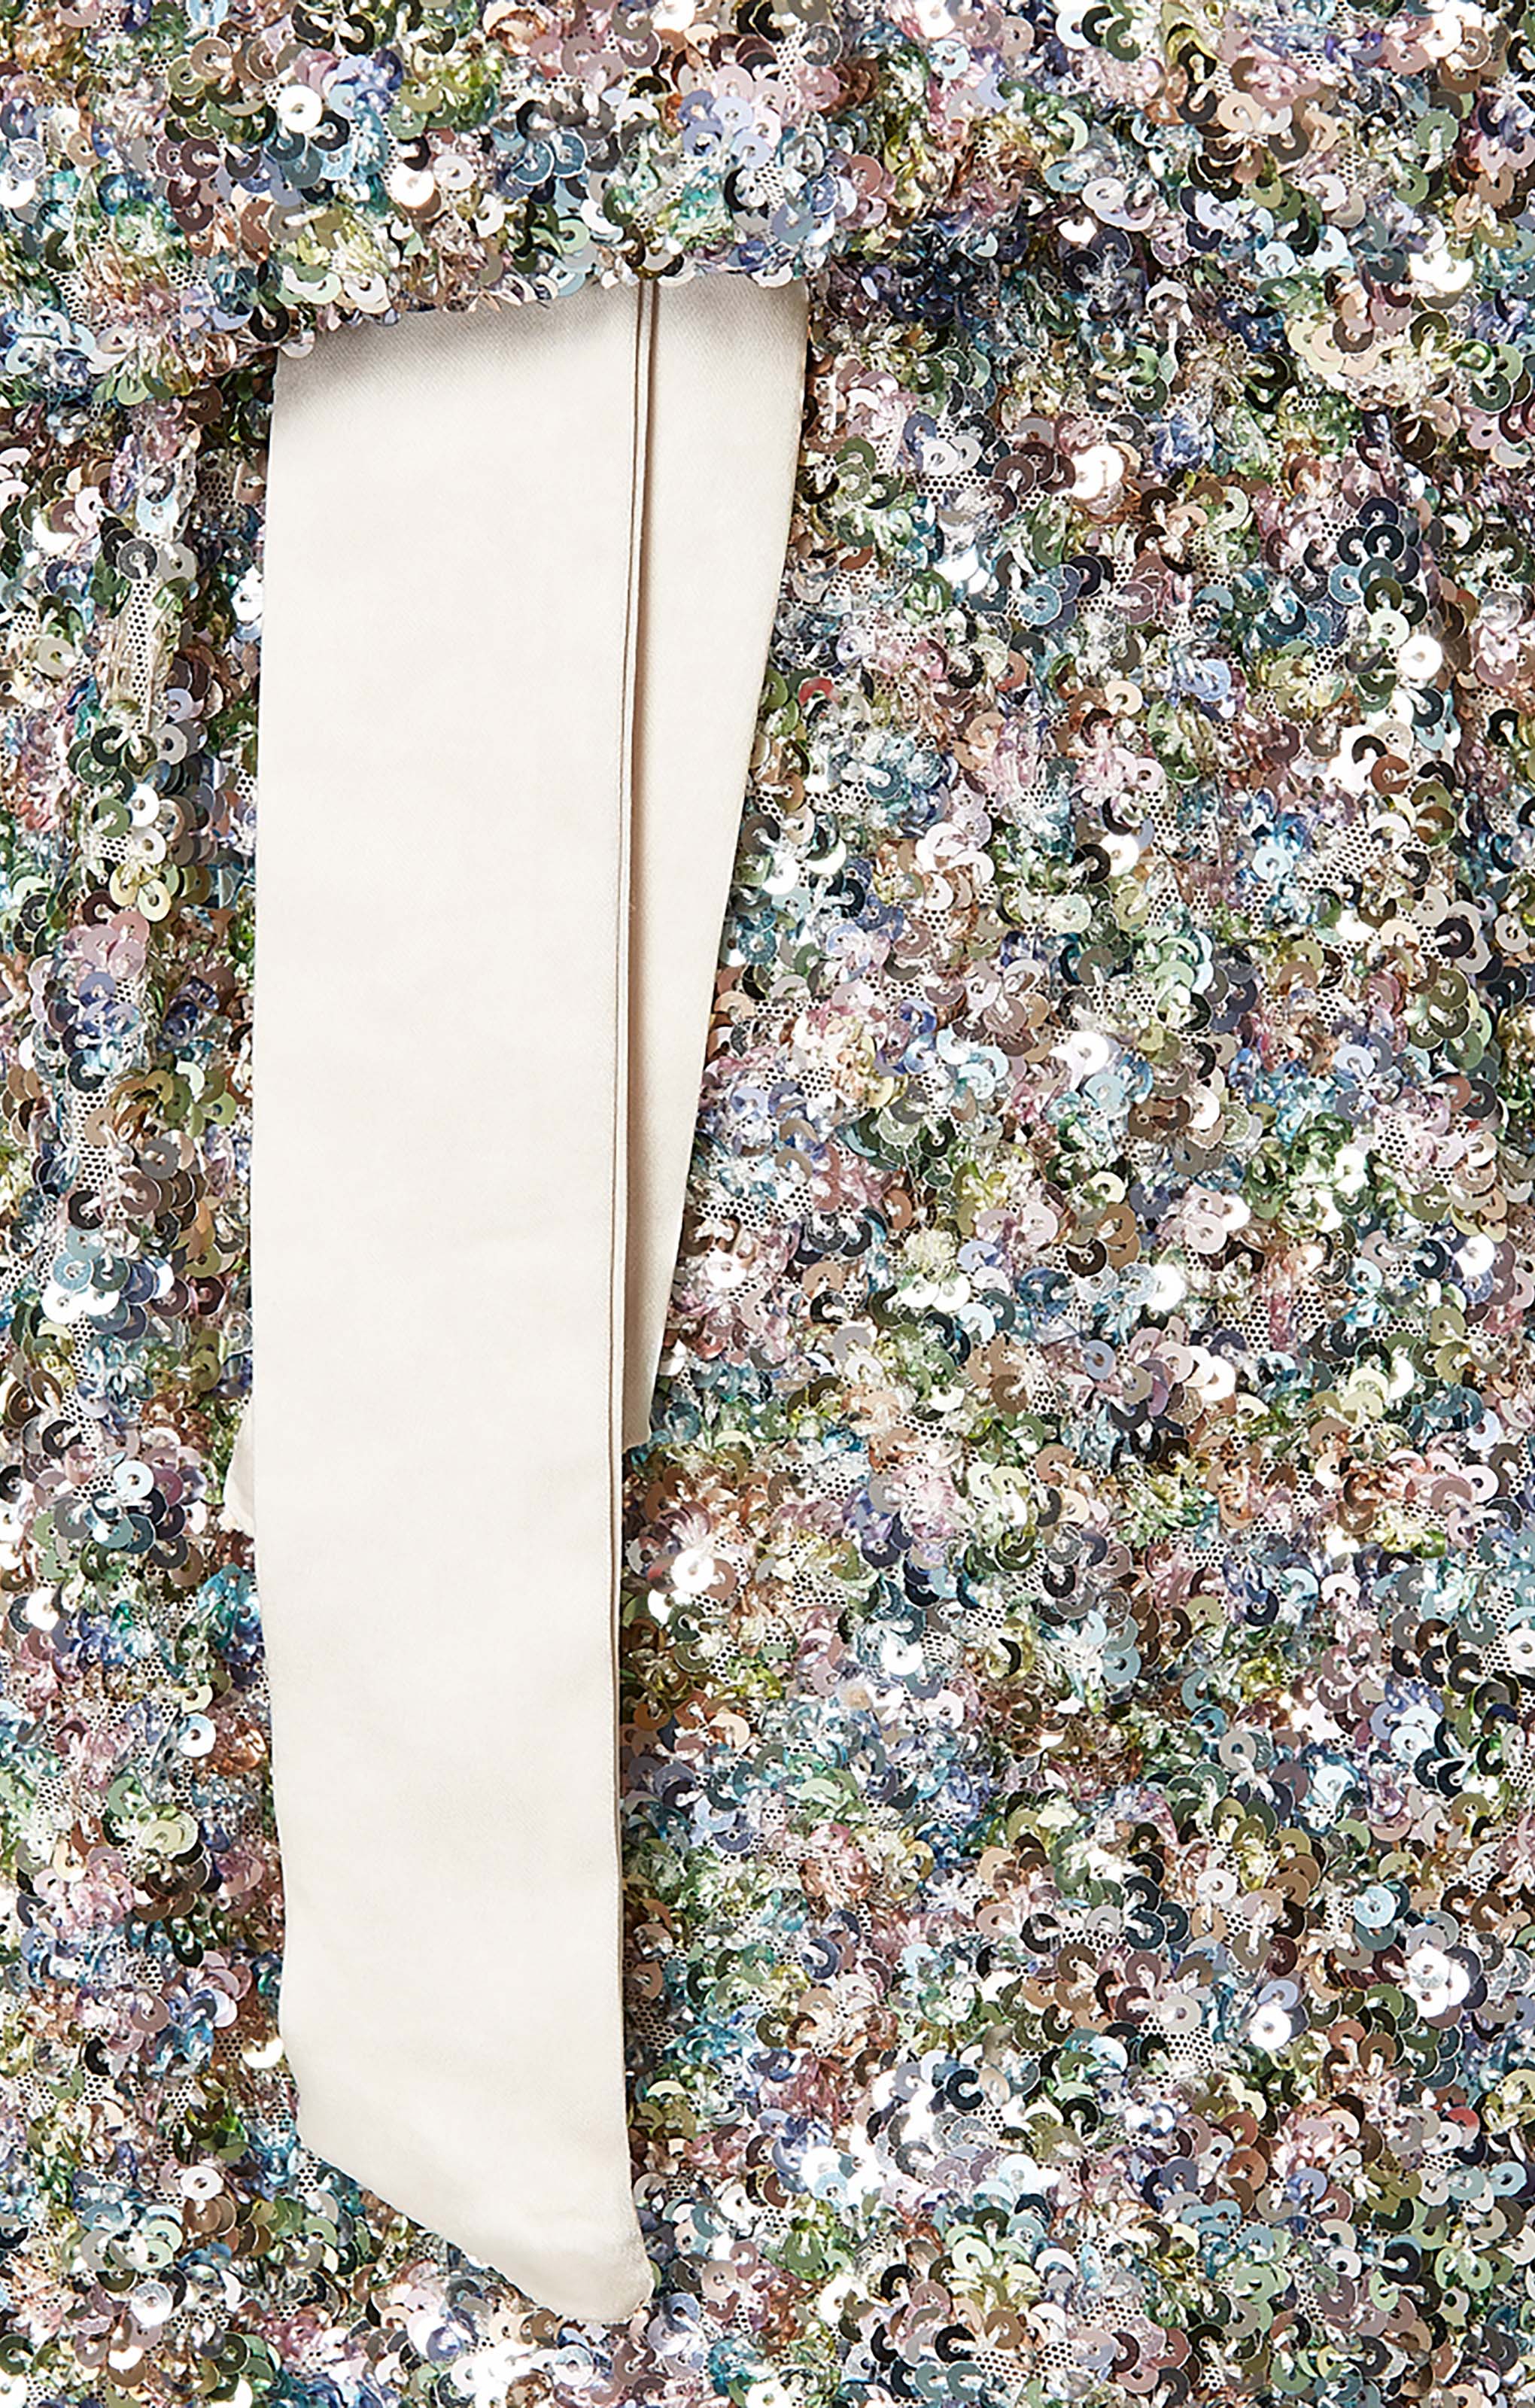 Winona Silver Mingle Long Sleeve Dress product image